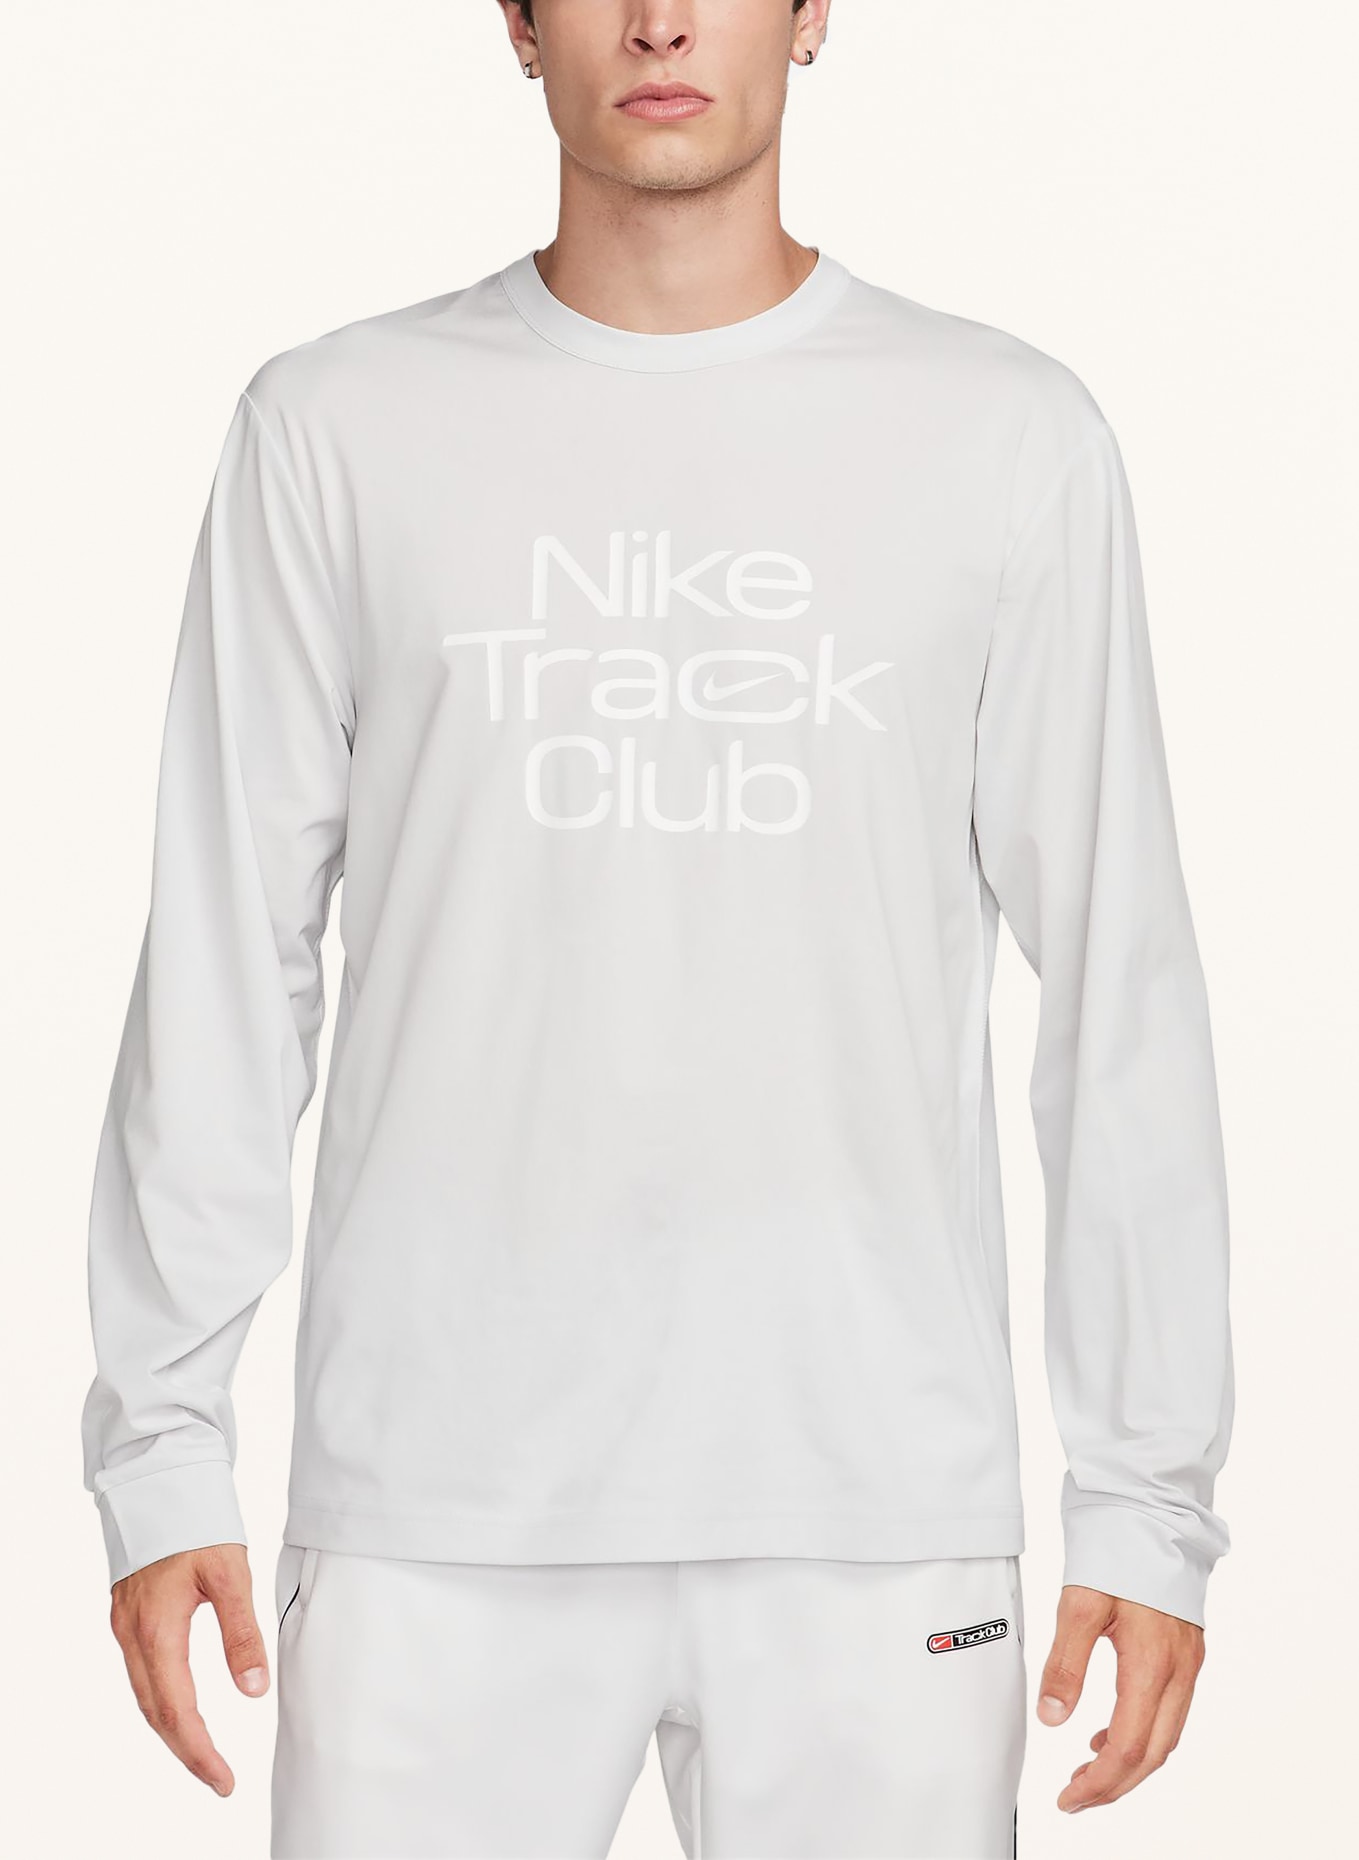 Nike Laufshirt TRACK CLUB in hellgrau/ weiss